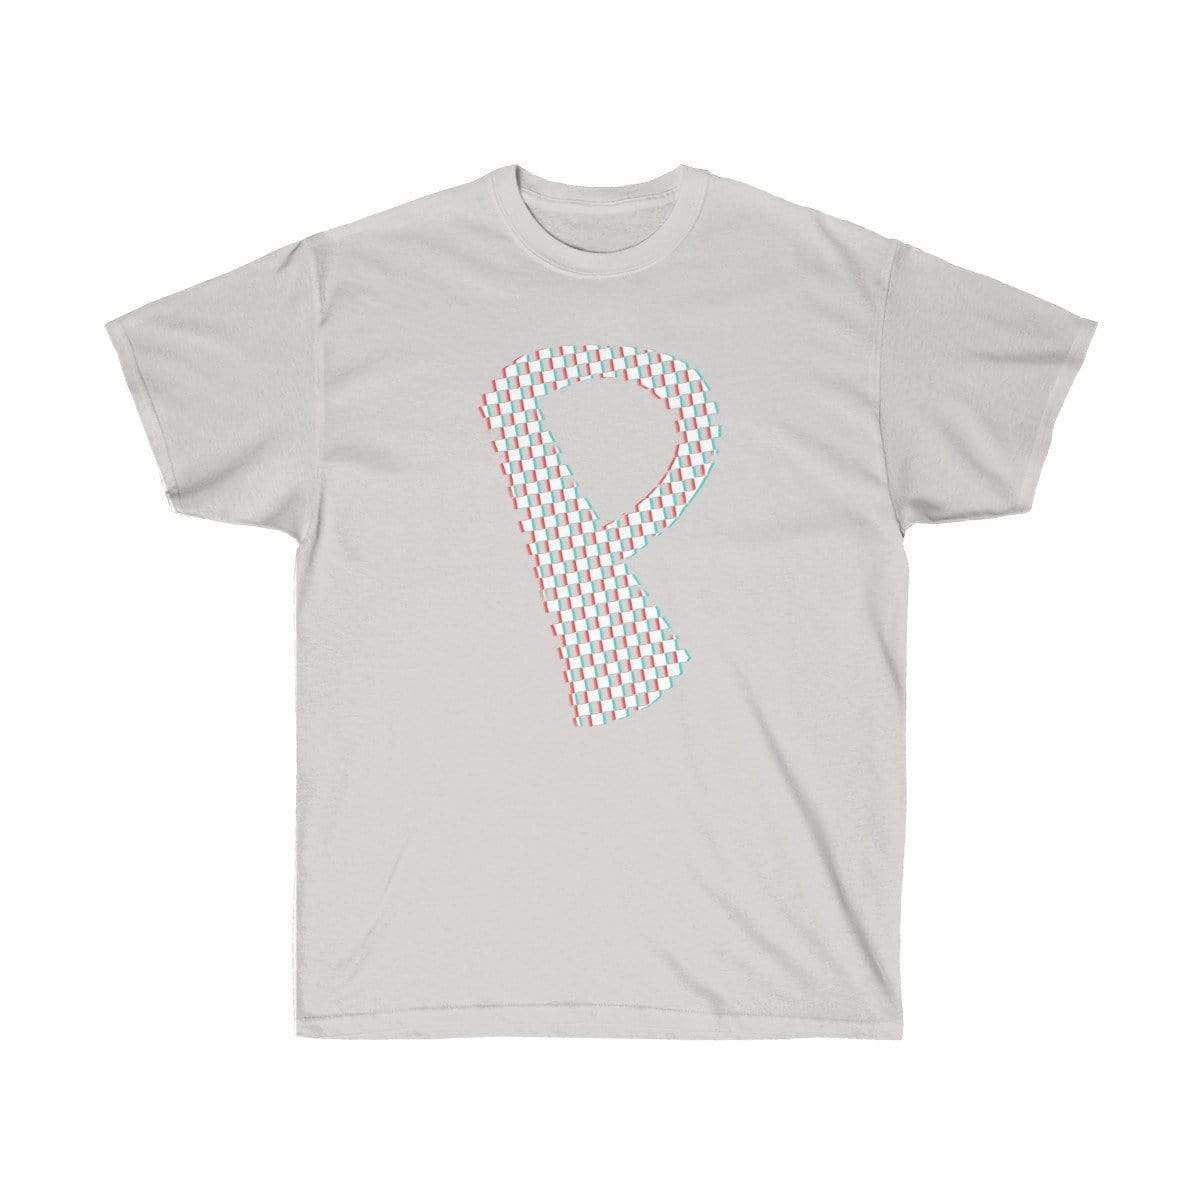 Plumskum T-Shirt Ash Grey / S Checkered, Glitchy, Capital P T-Shirt